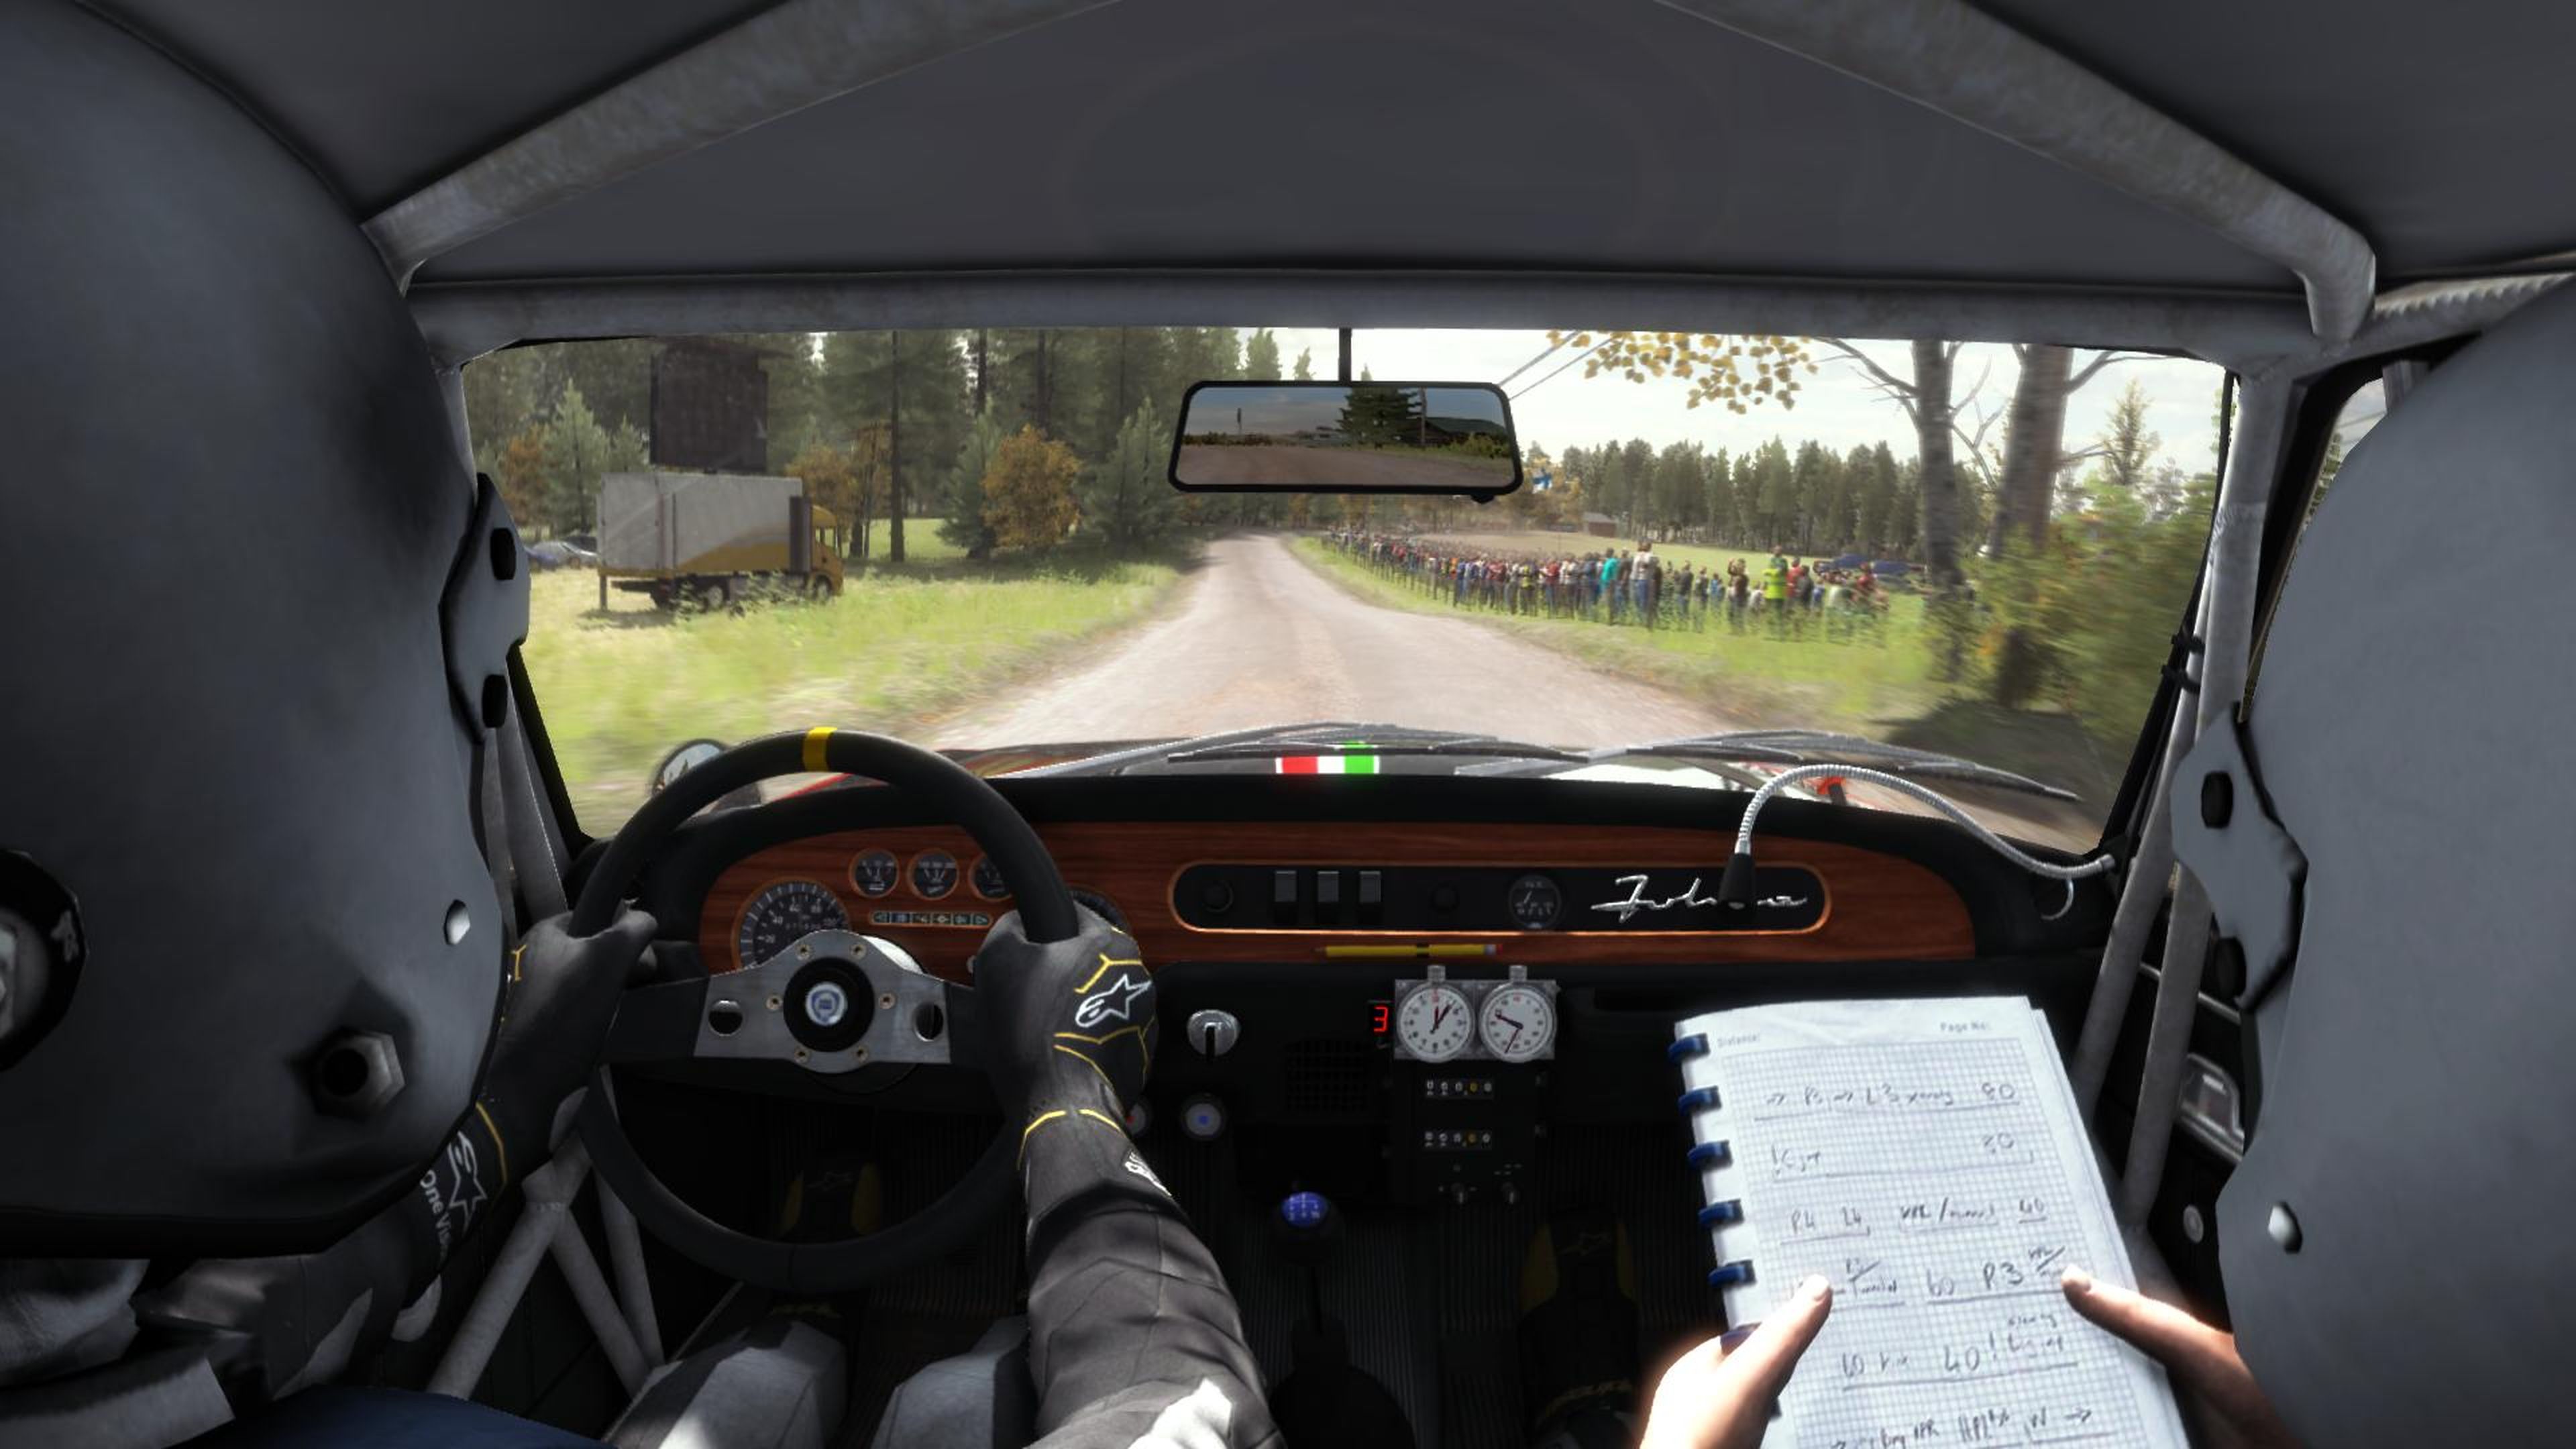 Análisis de Dirt Rally para PC